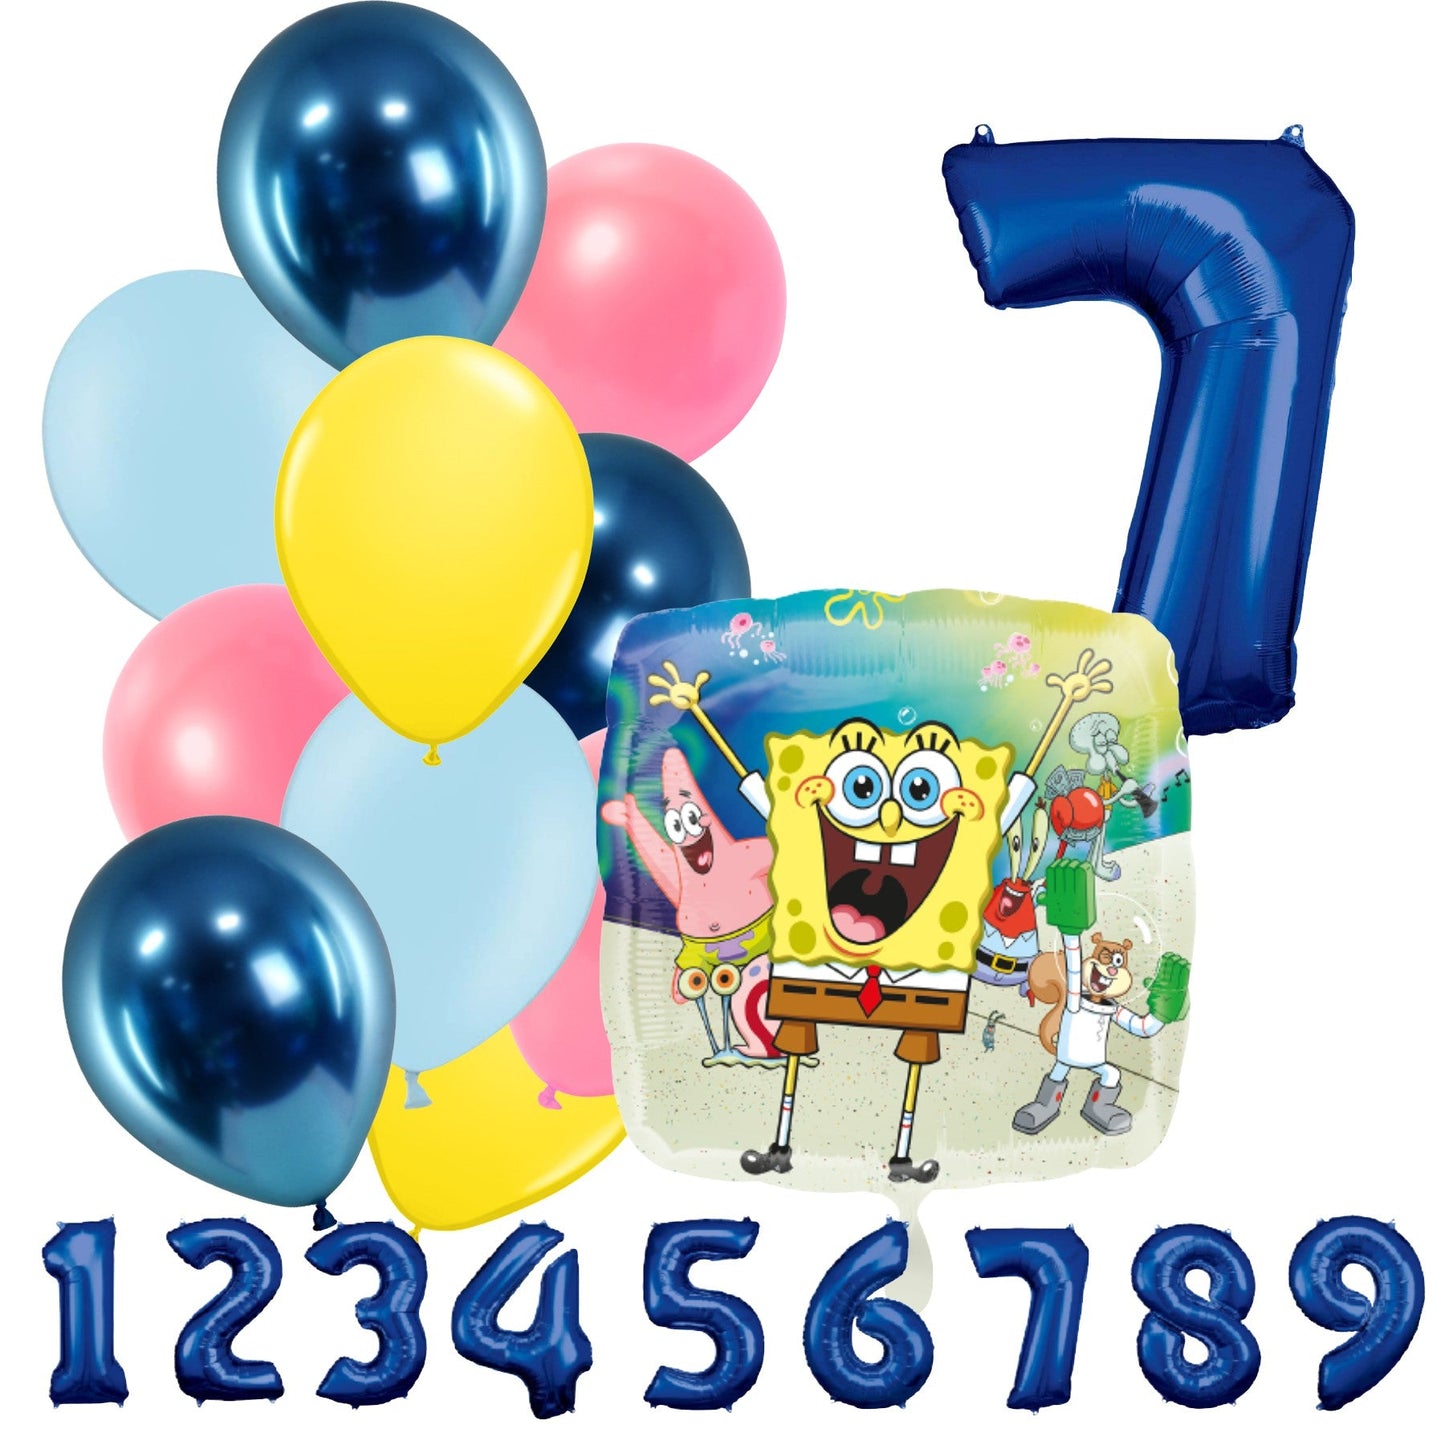 Partykarton "Spongebob" 12 Teile - Party im Karton